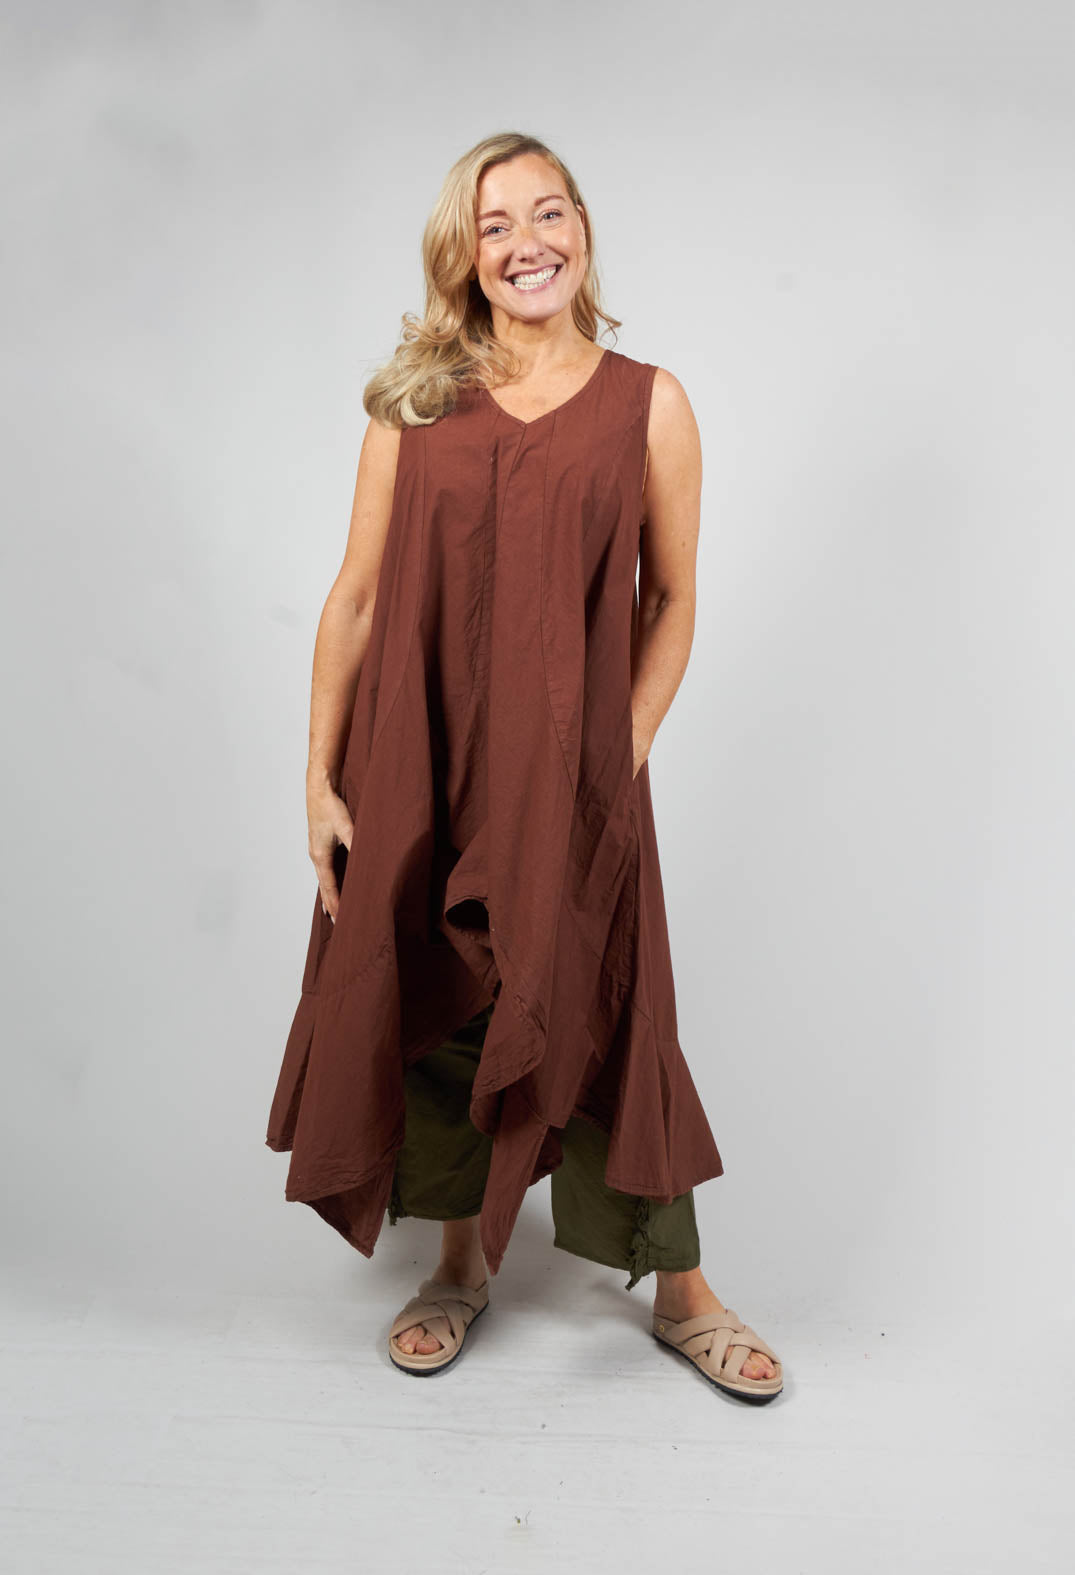 Unikrum Dress in Mudcloth Brown